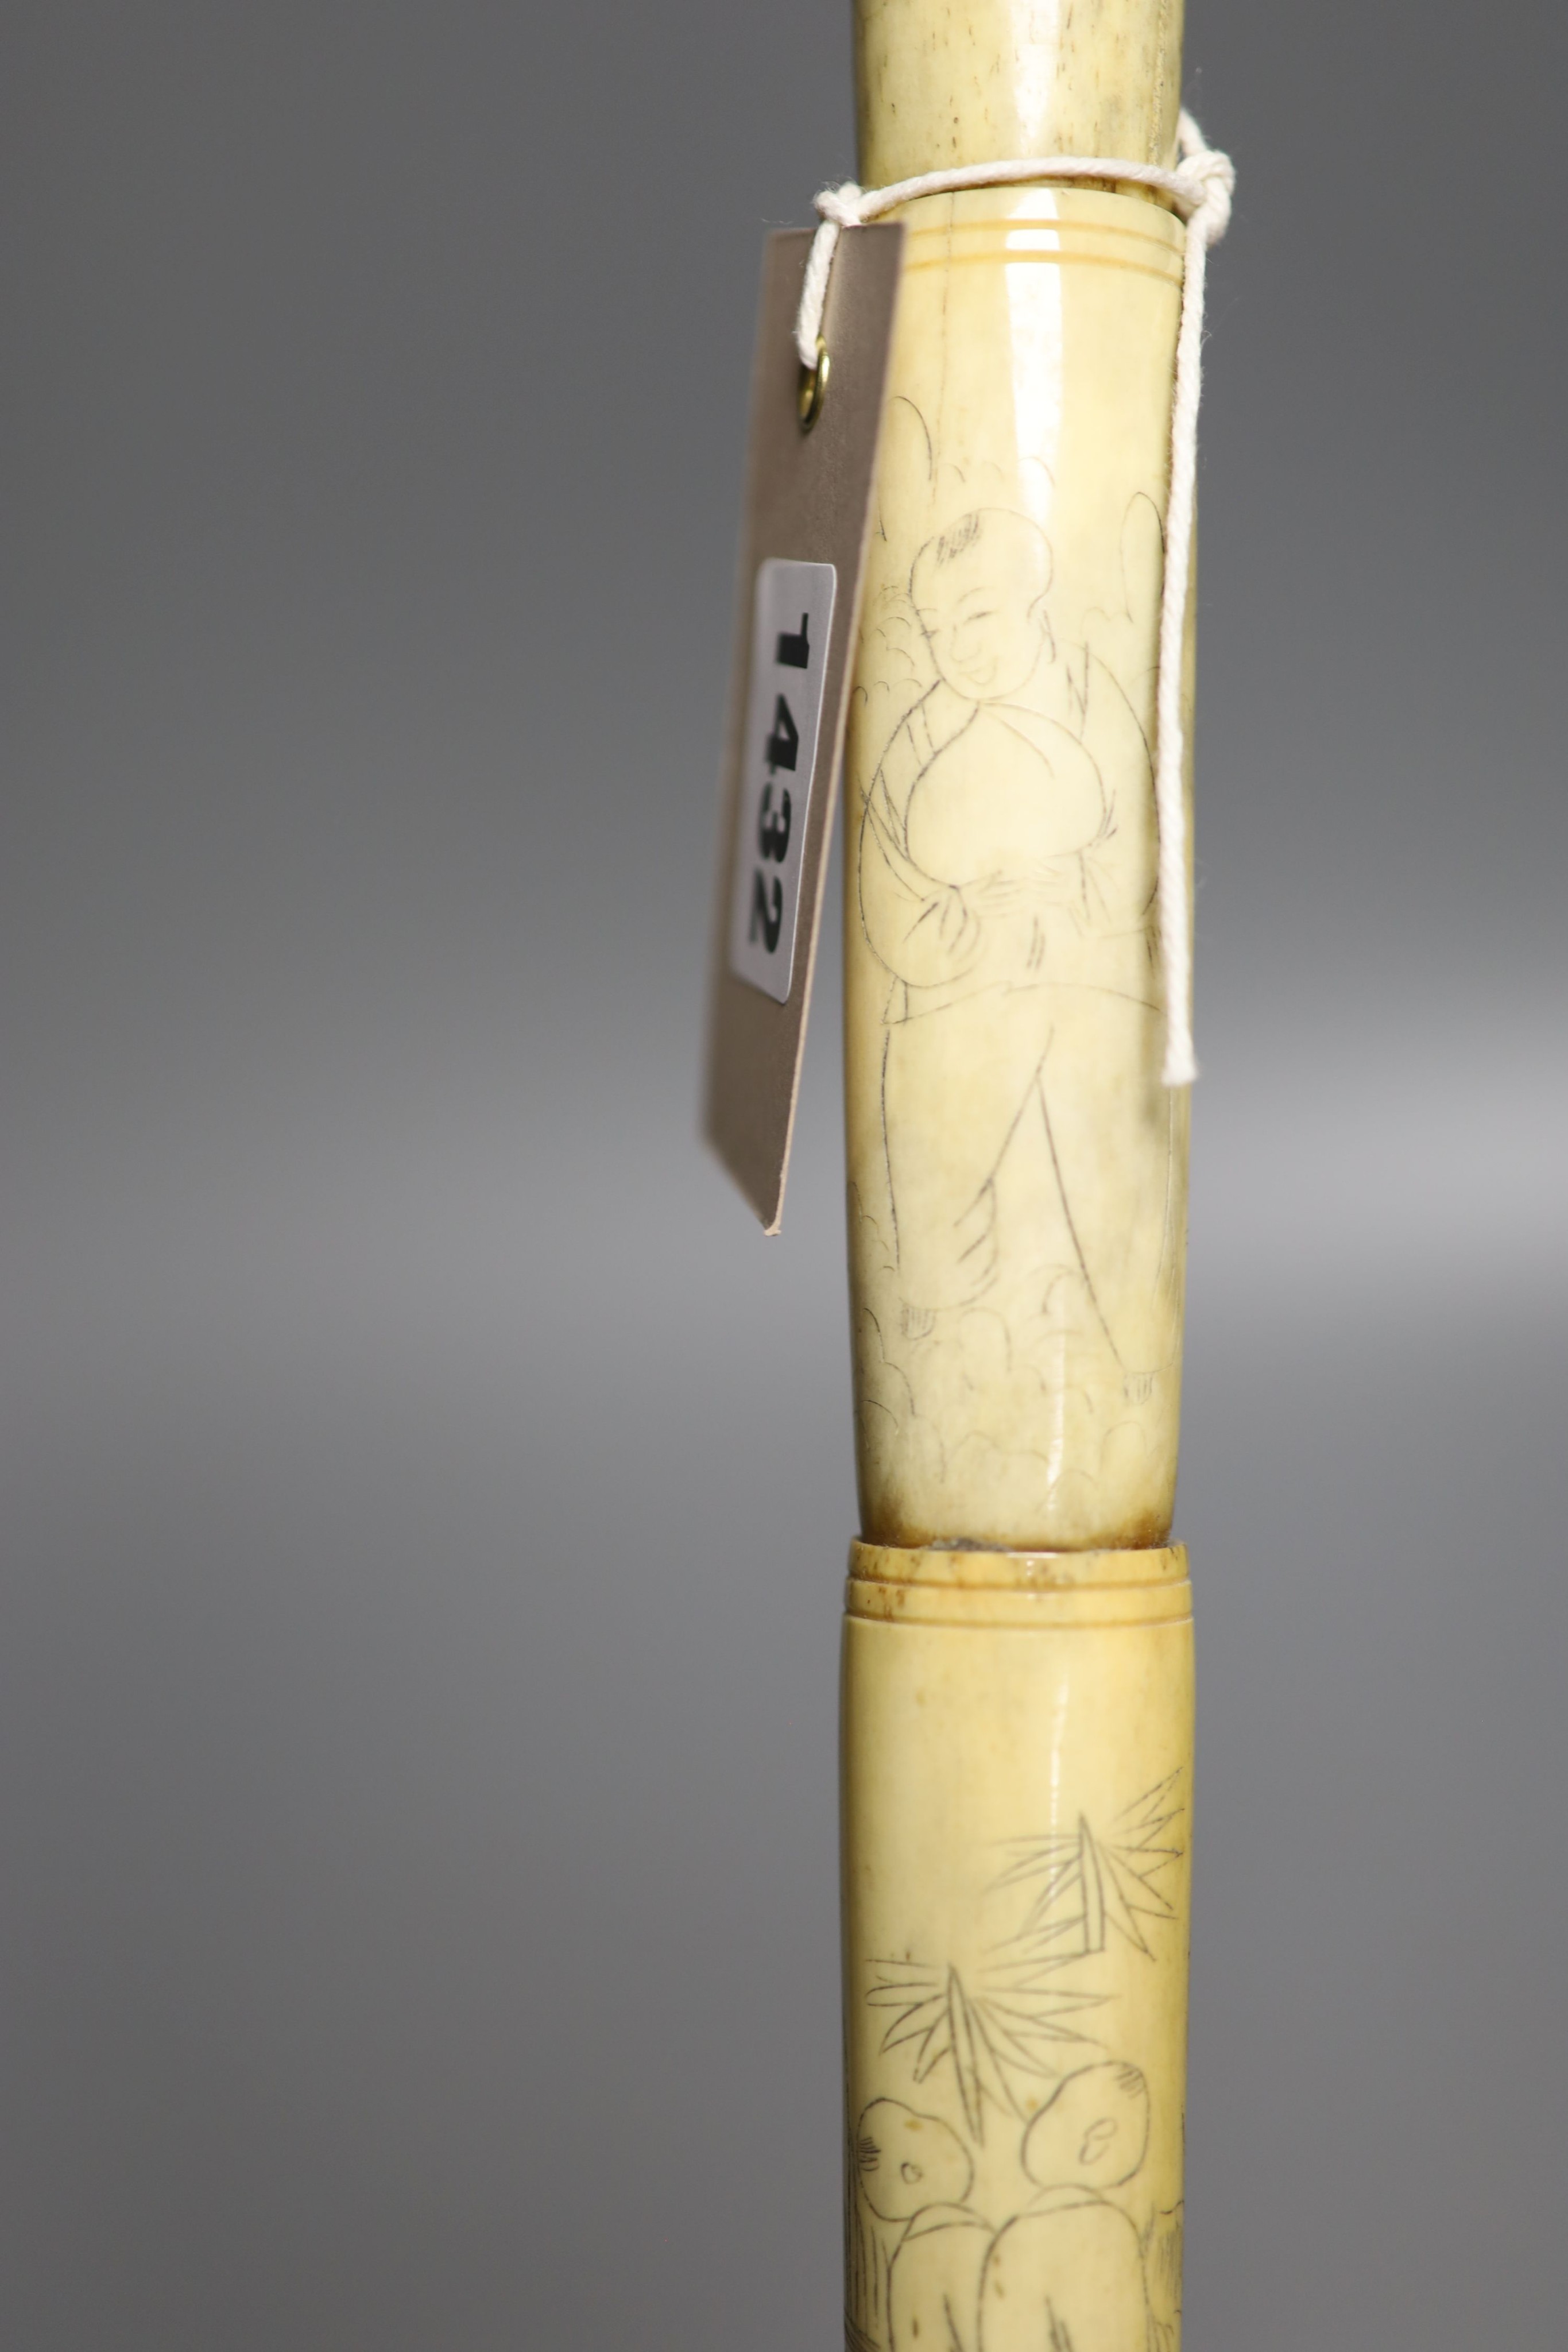 An engraved bone walking cane, 84cm